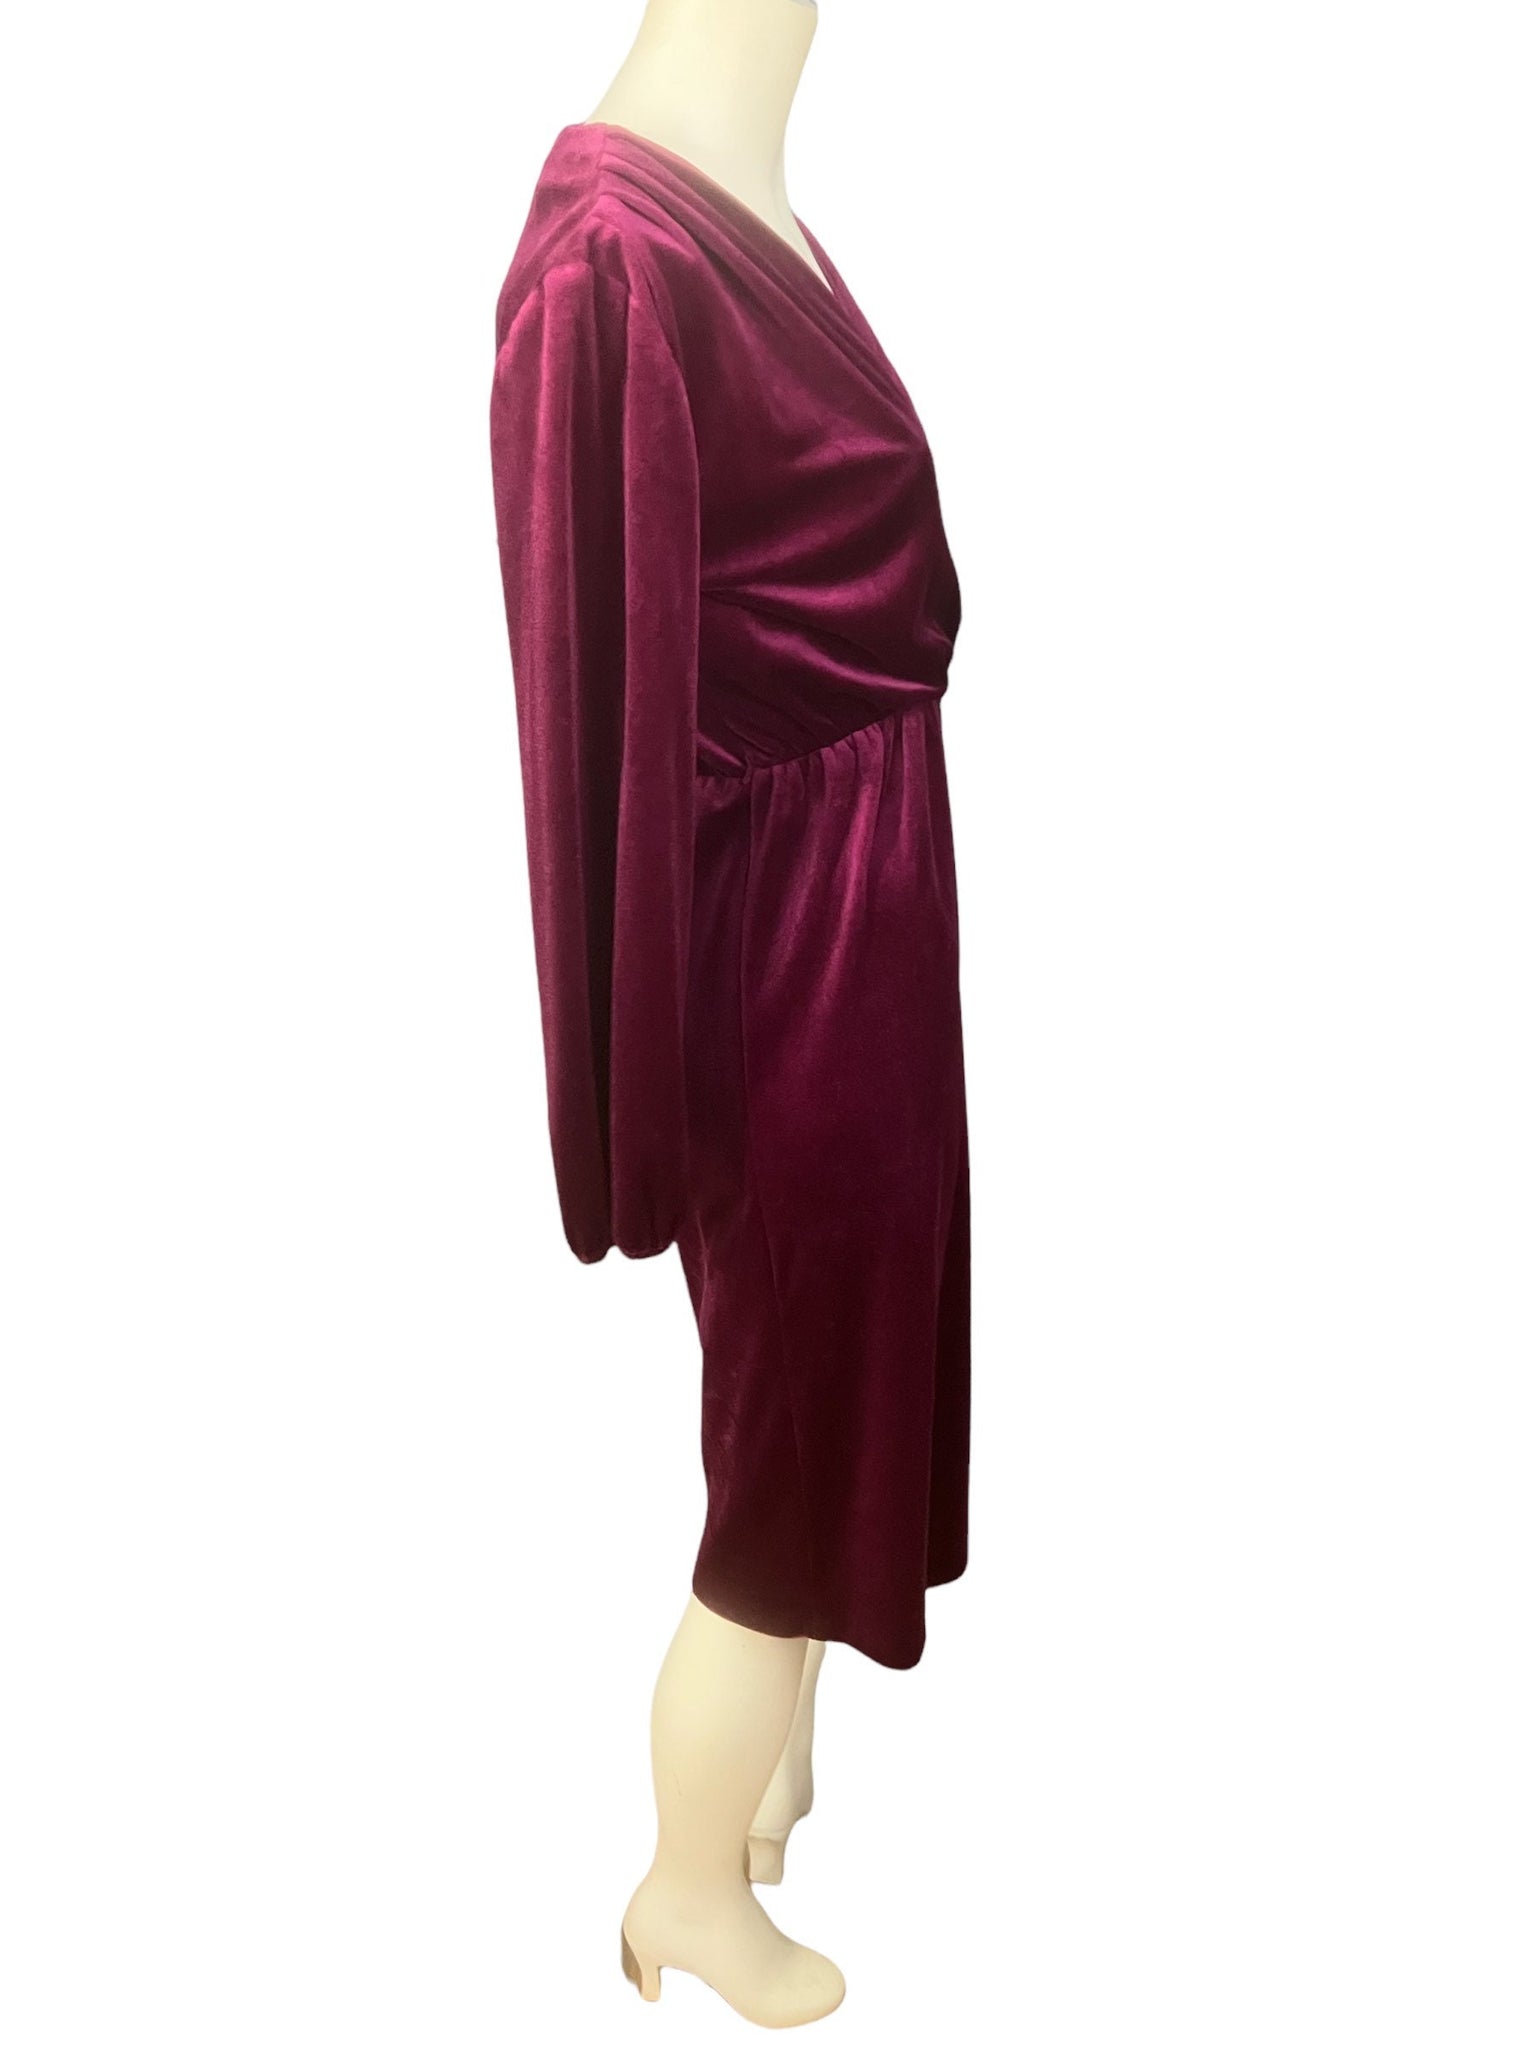 Vintage 70's maroon velar dress M L